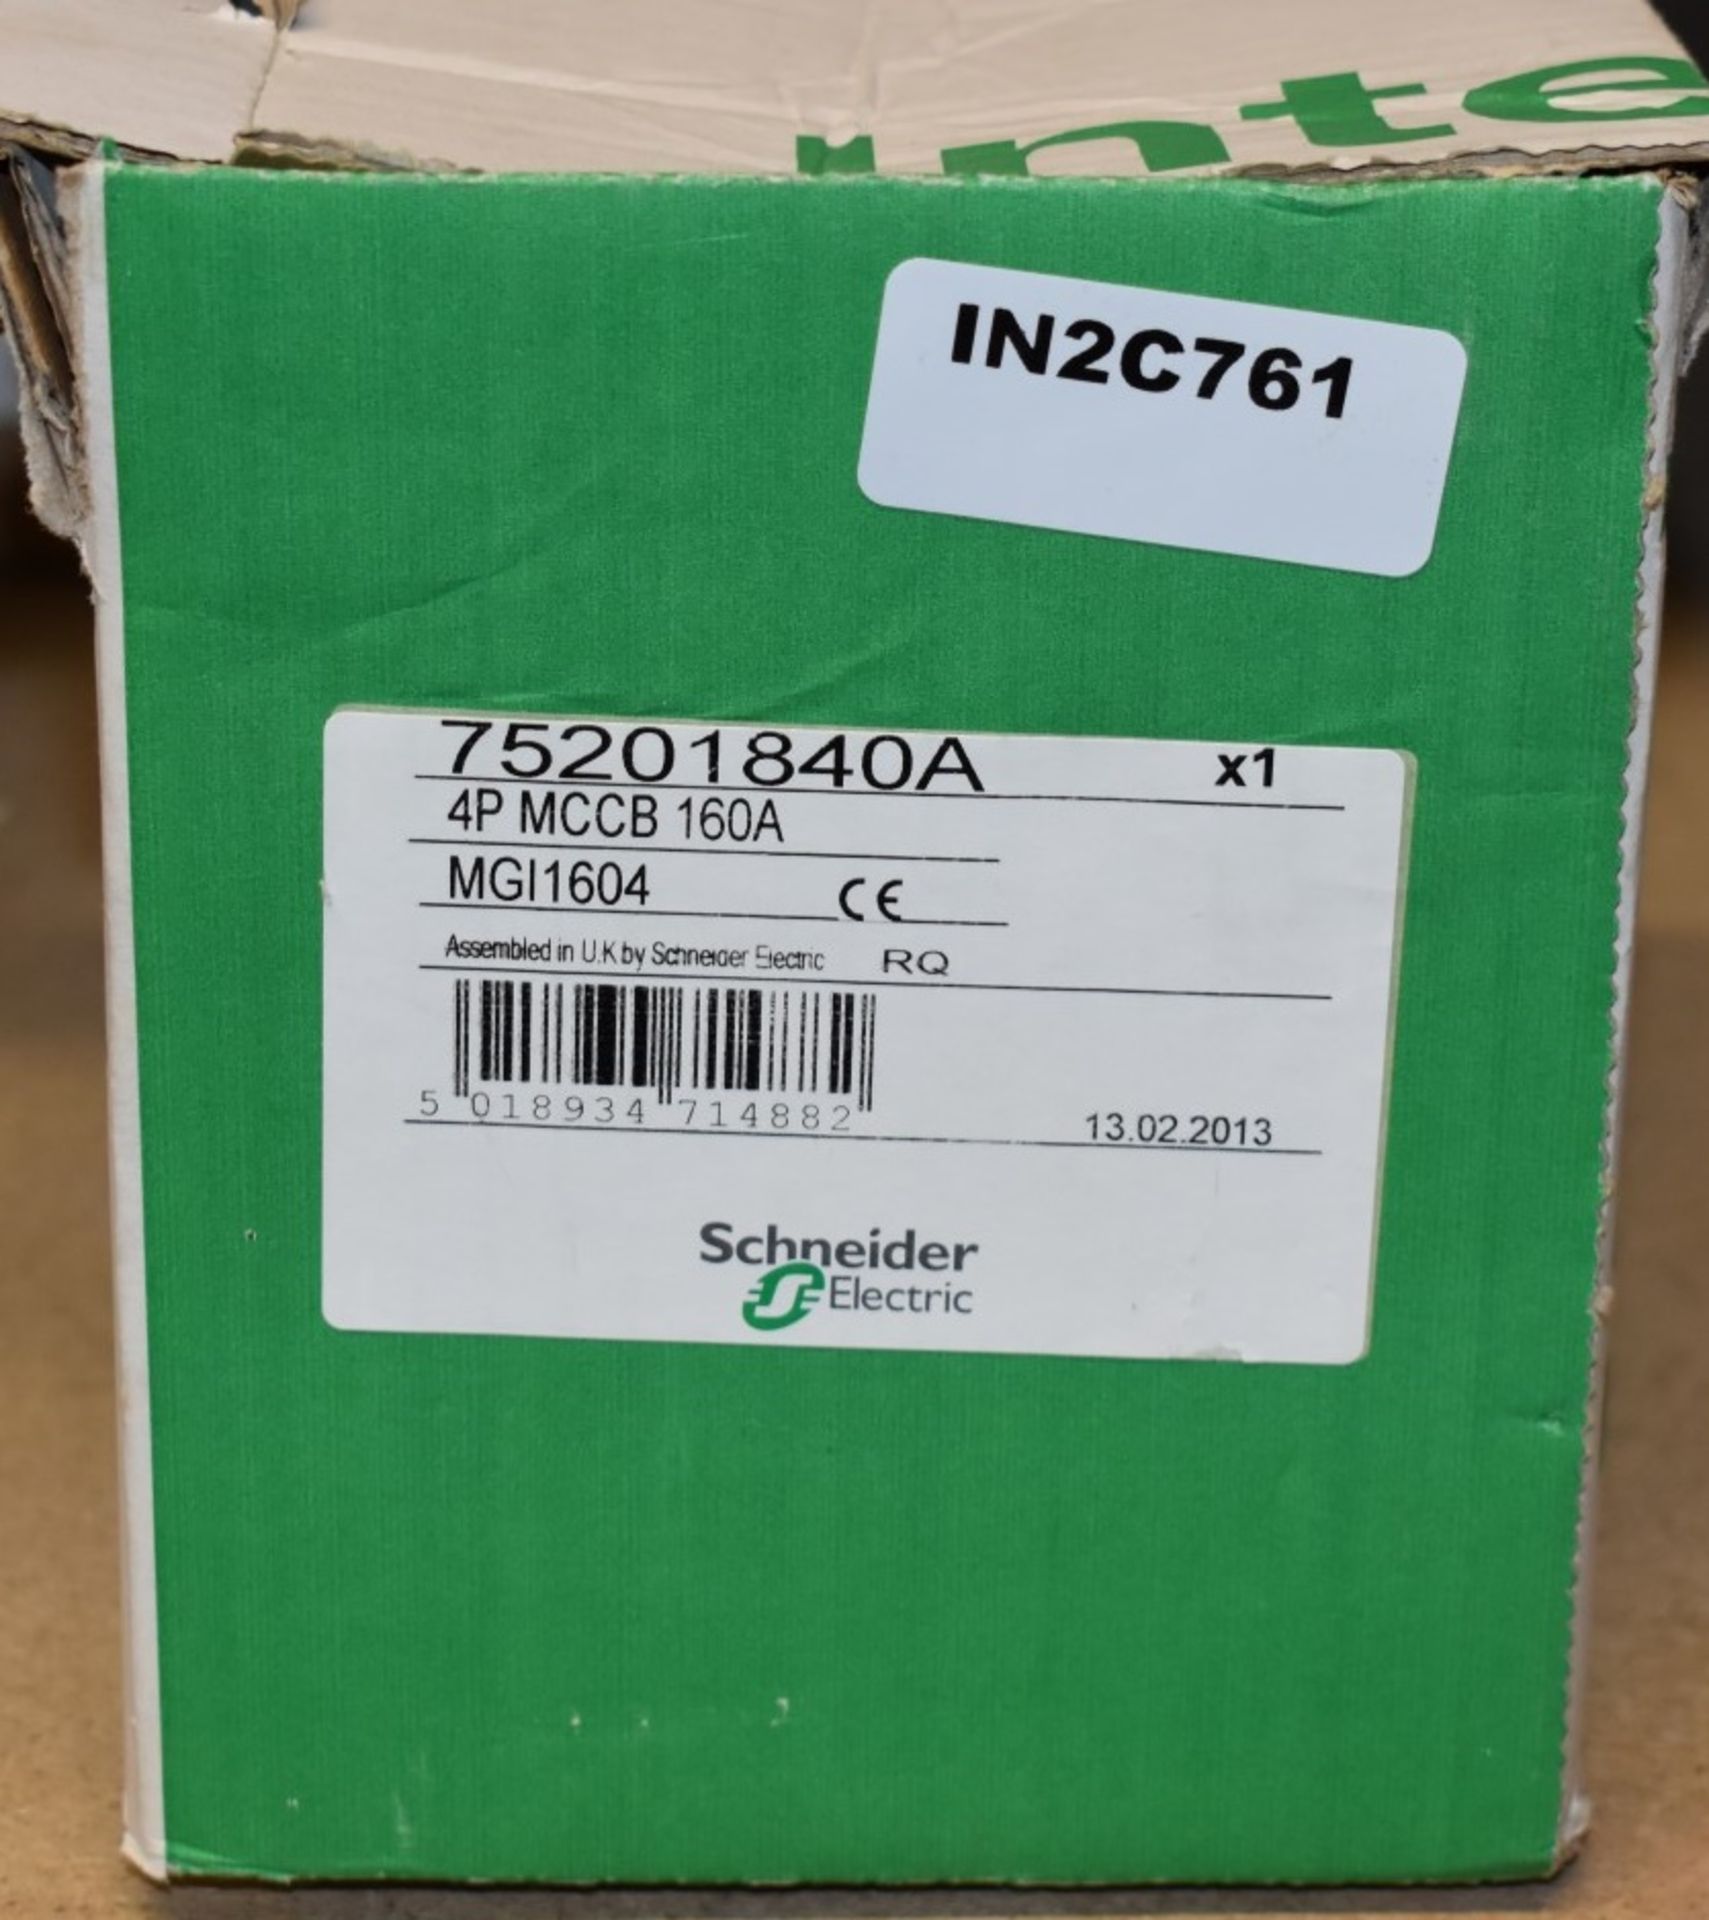 1 x Schneider 4P MCCB 160A Switch Disconnector - Product Code 75201840A - Includes Original Box